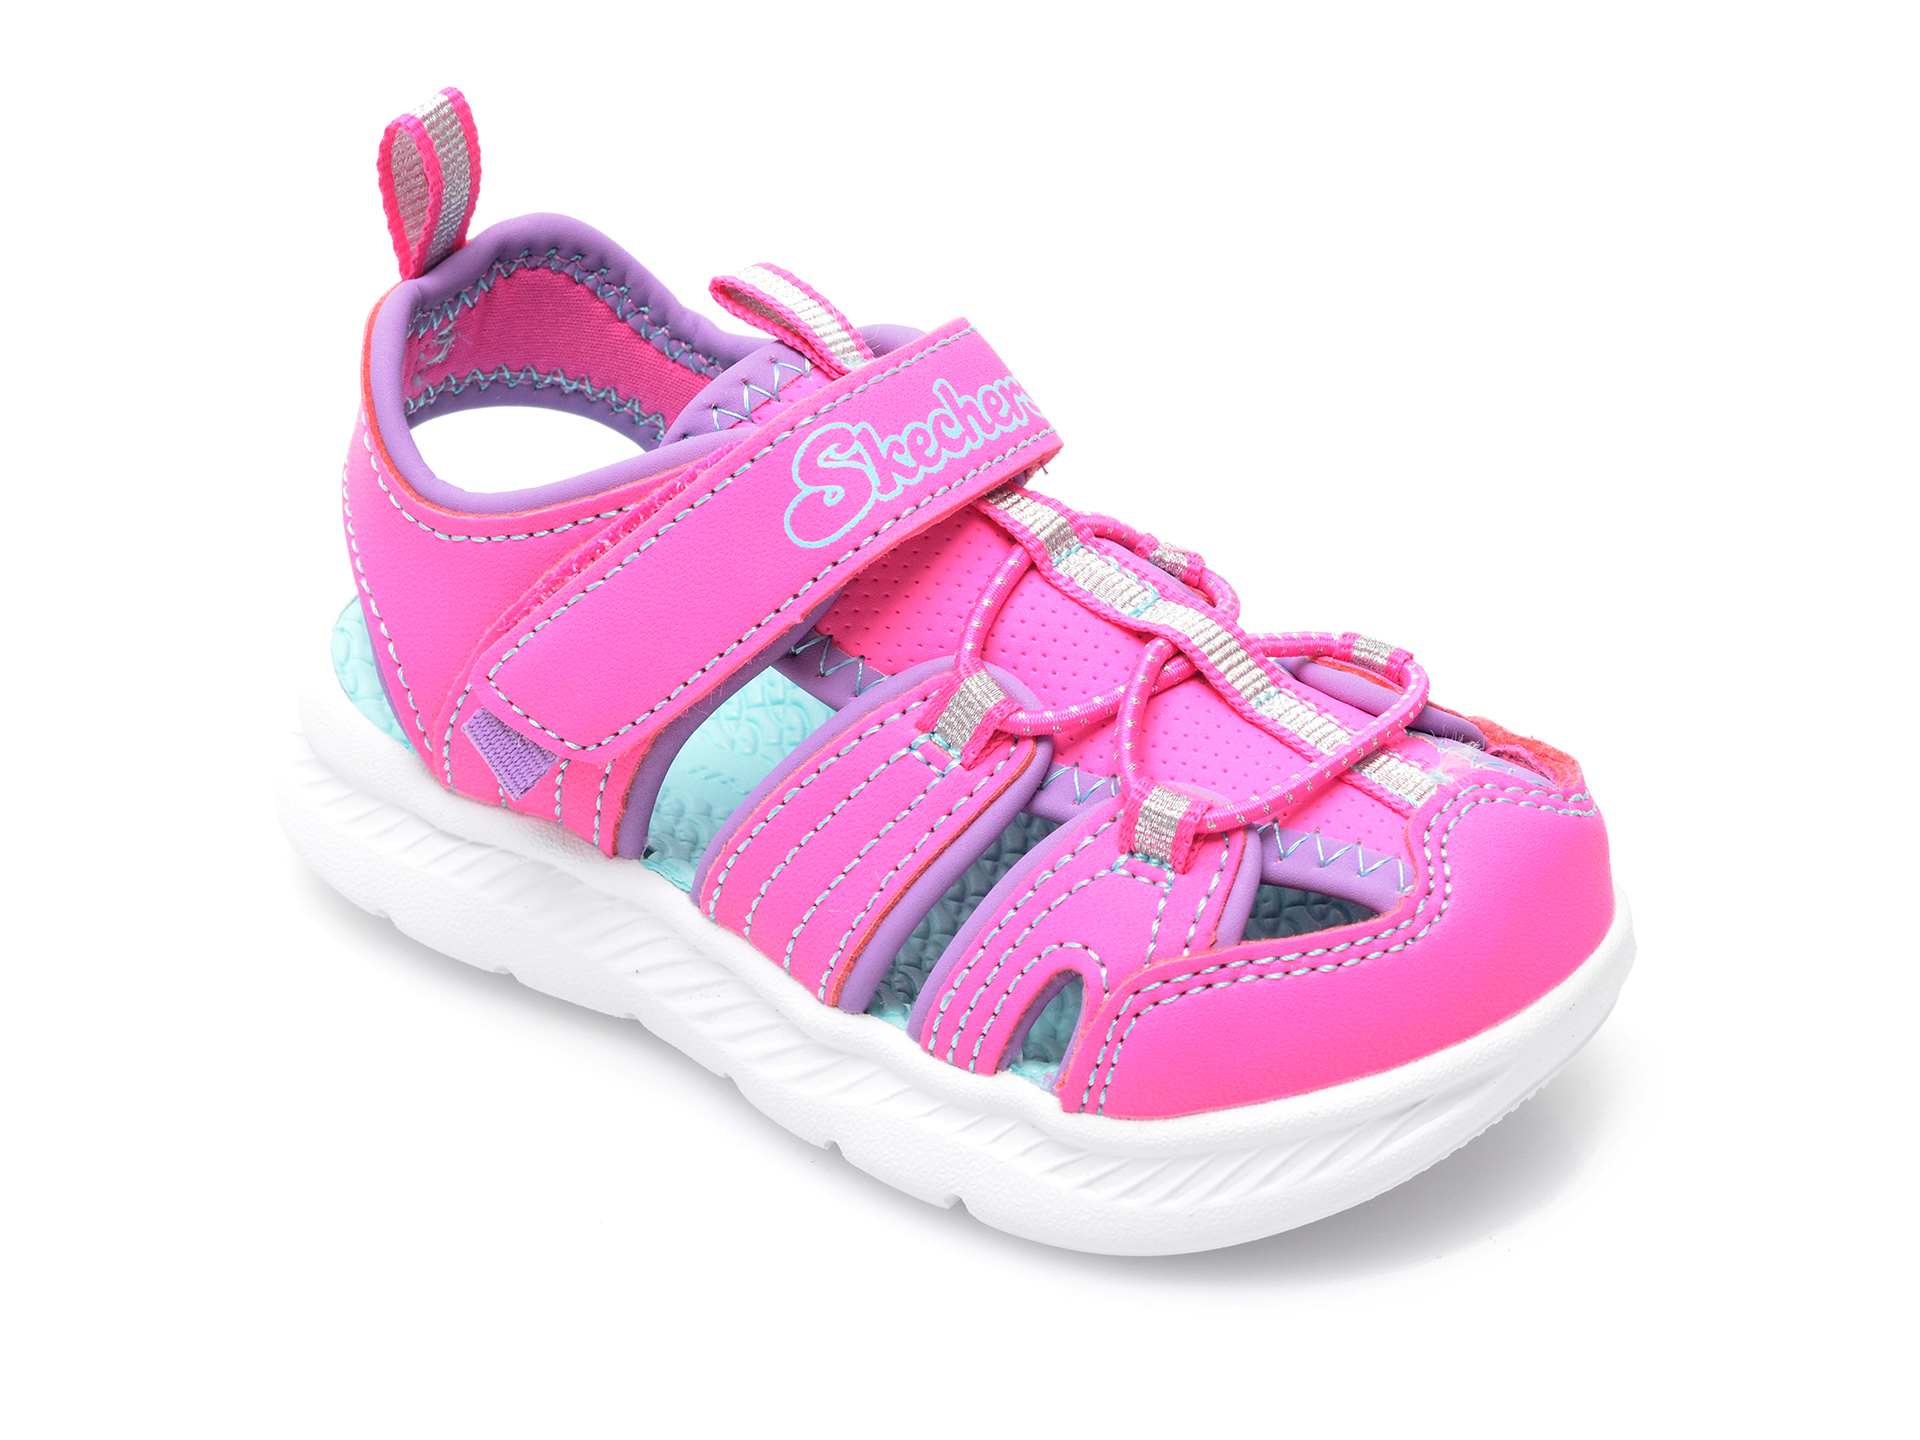 Sandale SKECHERS roz, C-Flex Sandal 2.0, din piele ecologica imagine otter.ro 2021